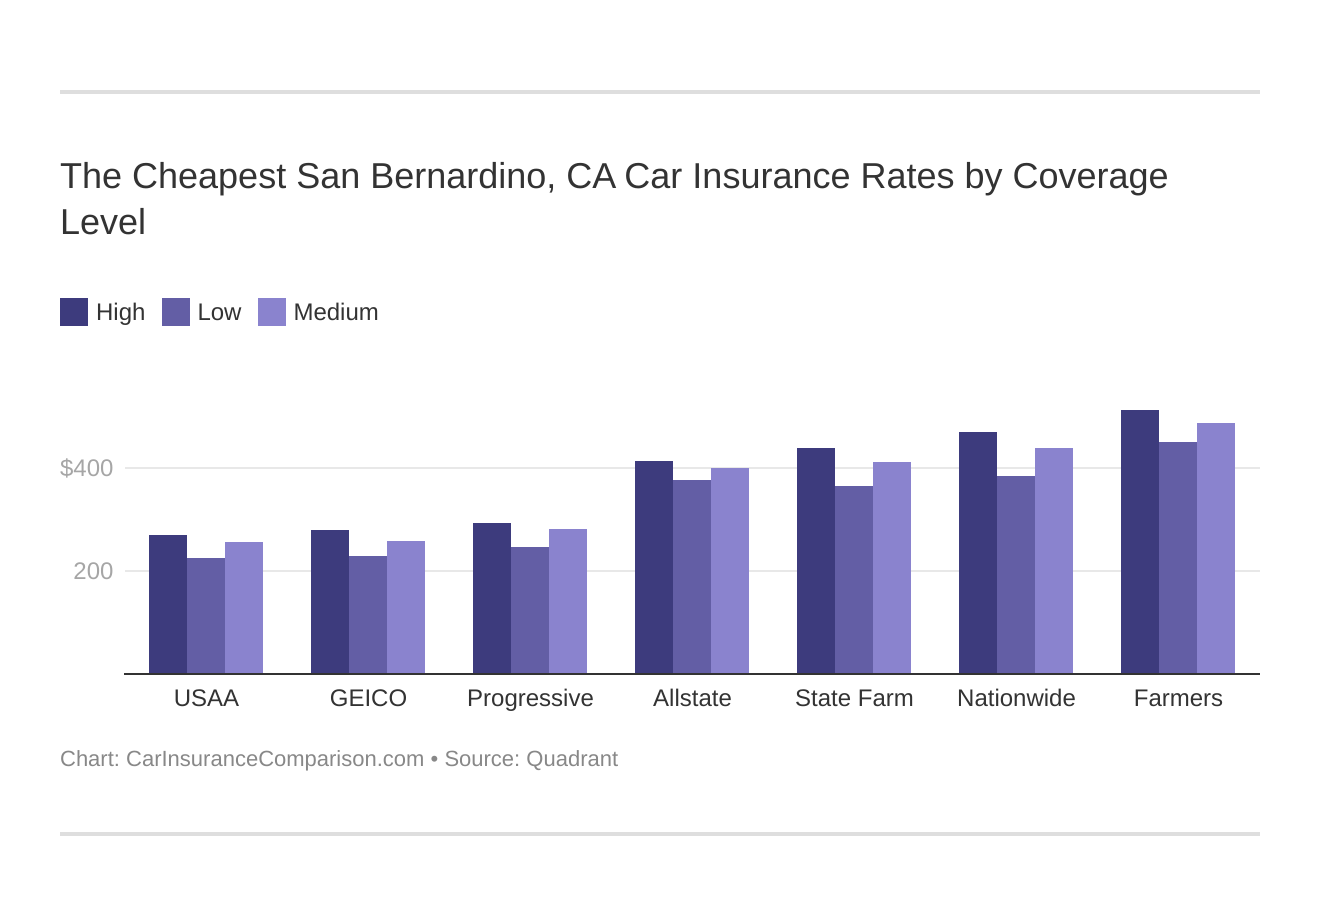 The Cheapest San Bernardino, CA Car Insurance Rates by Coverage Level